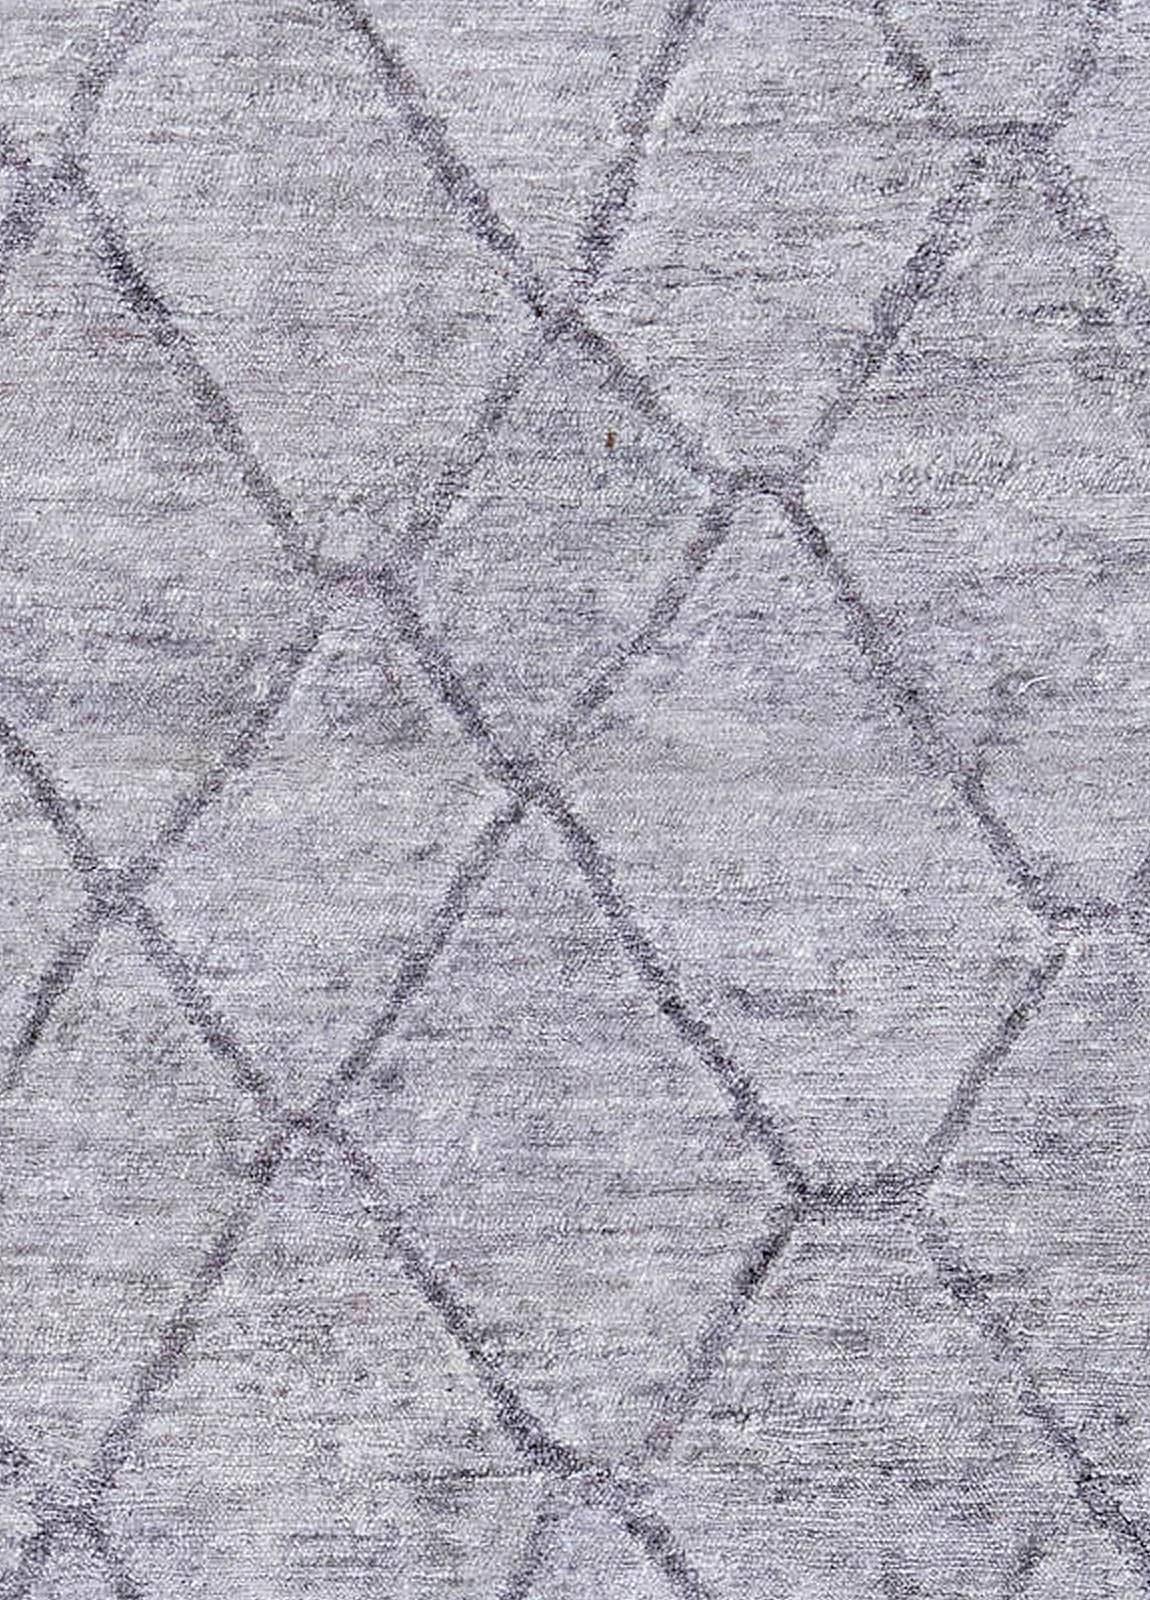 Contemporary geometric handmade silk rug by Doris Leslie Blau.
Size: 5'3